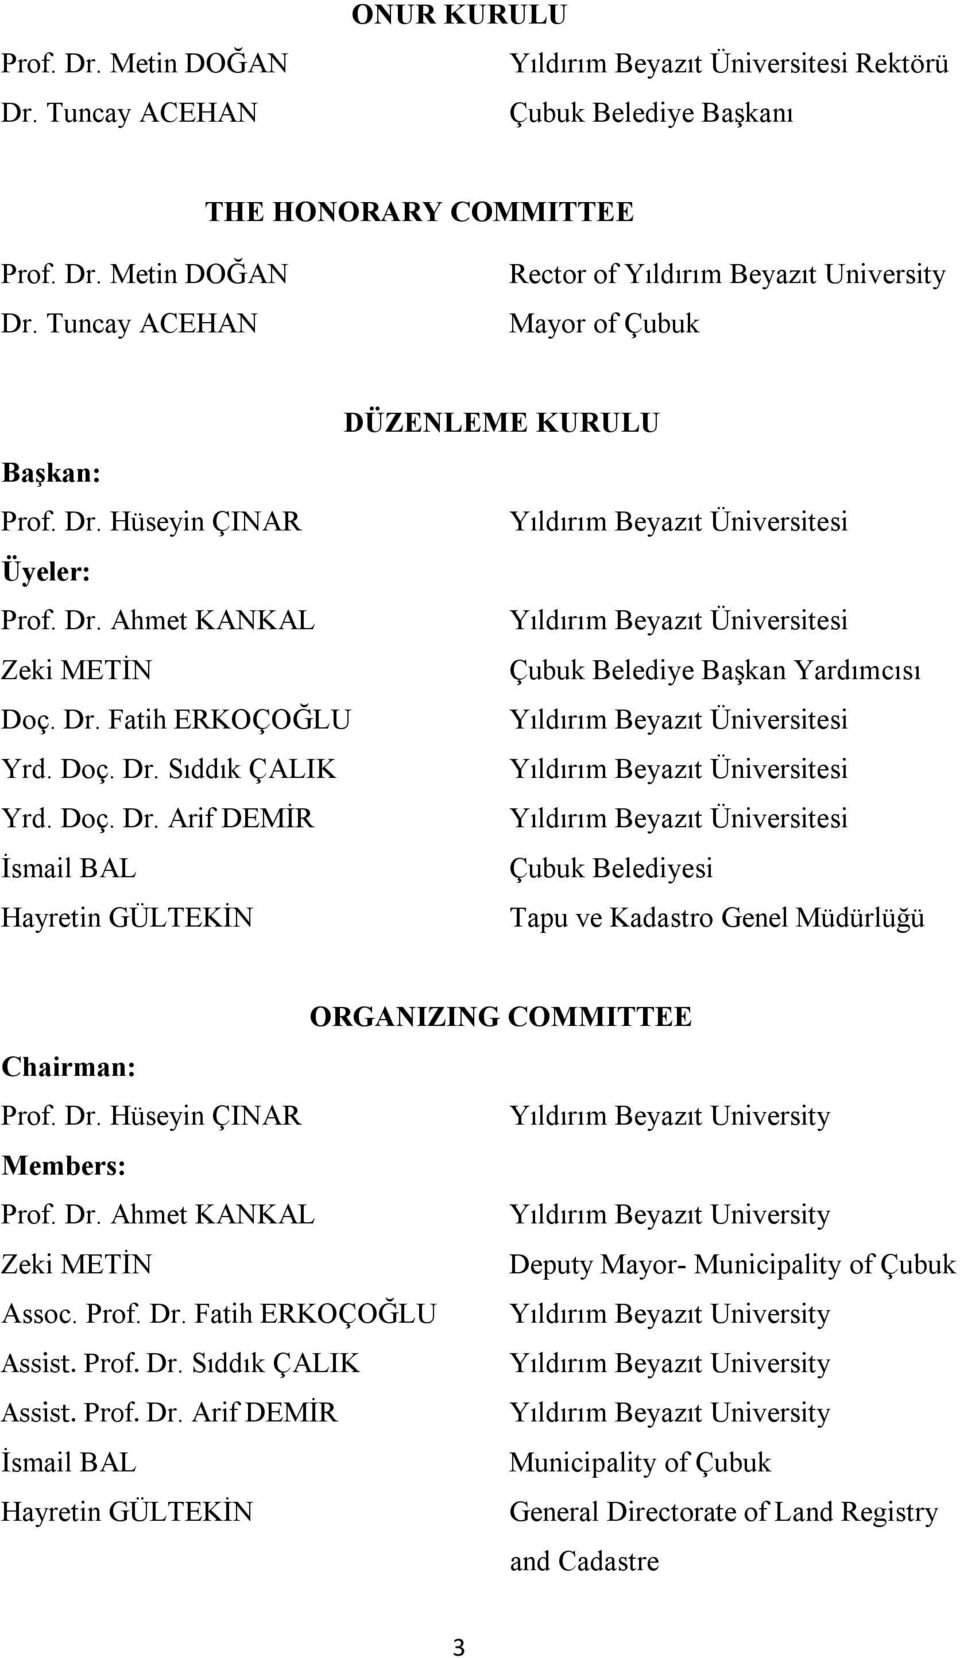 Dr. Hüseyin ÇINAR Members: Prof. Dr. Ahmet KANKAL Zeki METİN Deputy Mayor- Municipality of Çubuk Assoc. Prof. Dr. Fatih ERKOÇOĞLU Assist. Prof. Dr. Sıddık ÇALIK Assist. Prof. Dr. Arif DEMİR İsmail BAL Municipality of Çubuk Hayretin GÜLTEKİN General Directorate of Land Registry and Cadastre 3